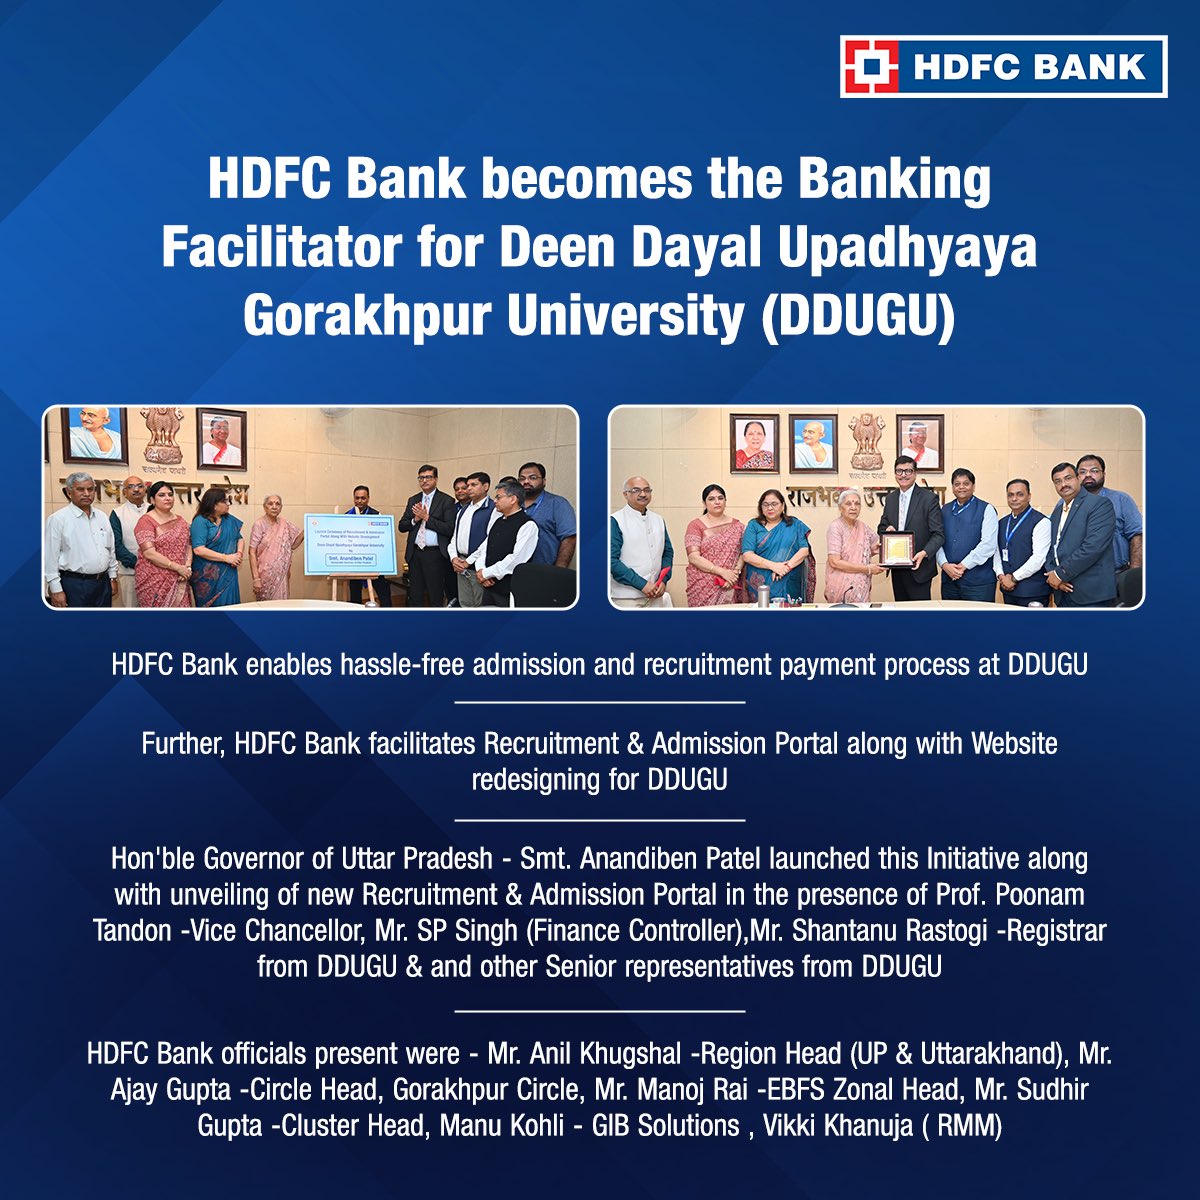 HDFC Bank - Deen Dayal Upadhyaya Gorakhpur University (DDUGU) ink pact Read Below to know more: #HDFCBank #News #DDUGU #Banking